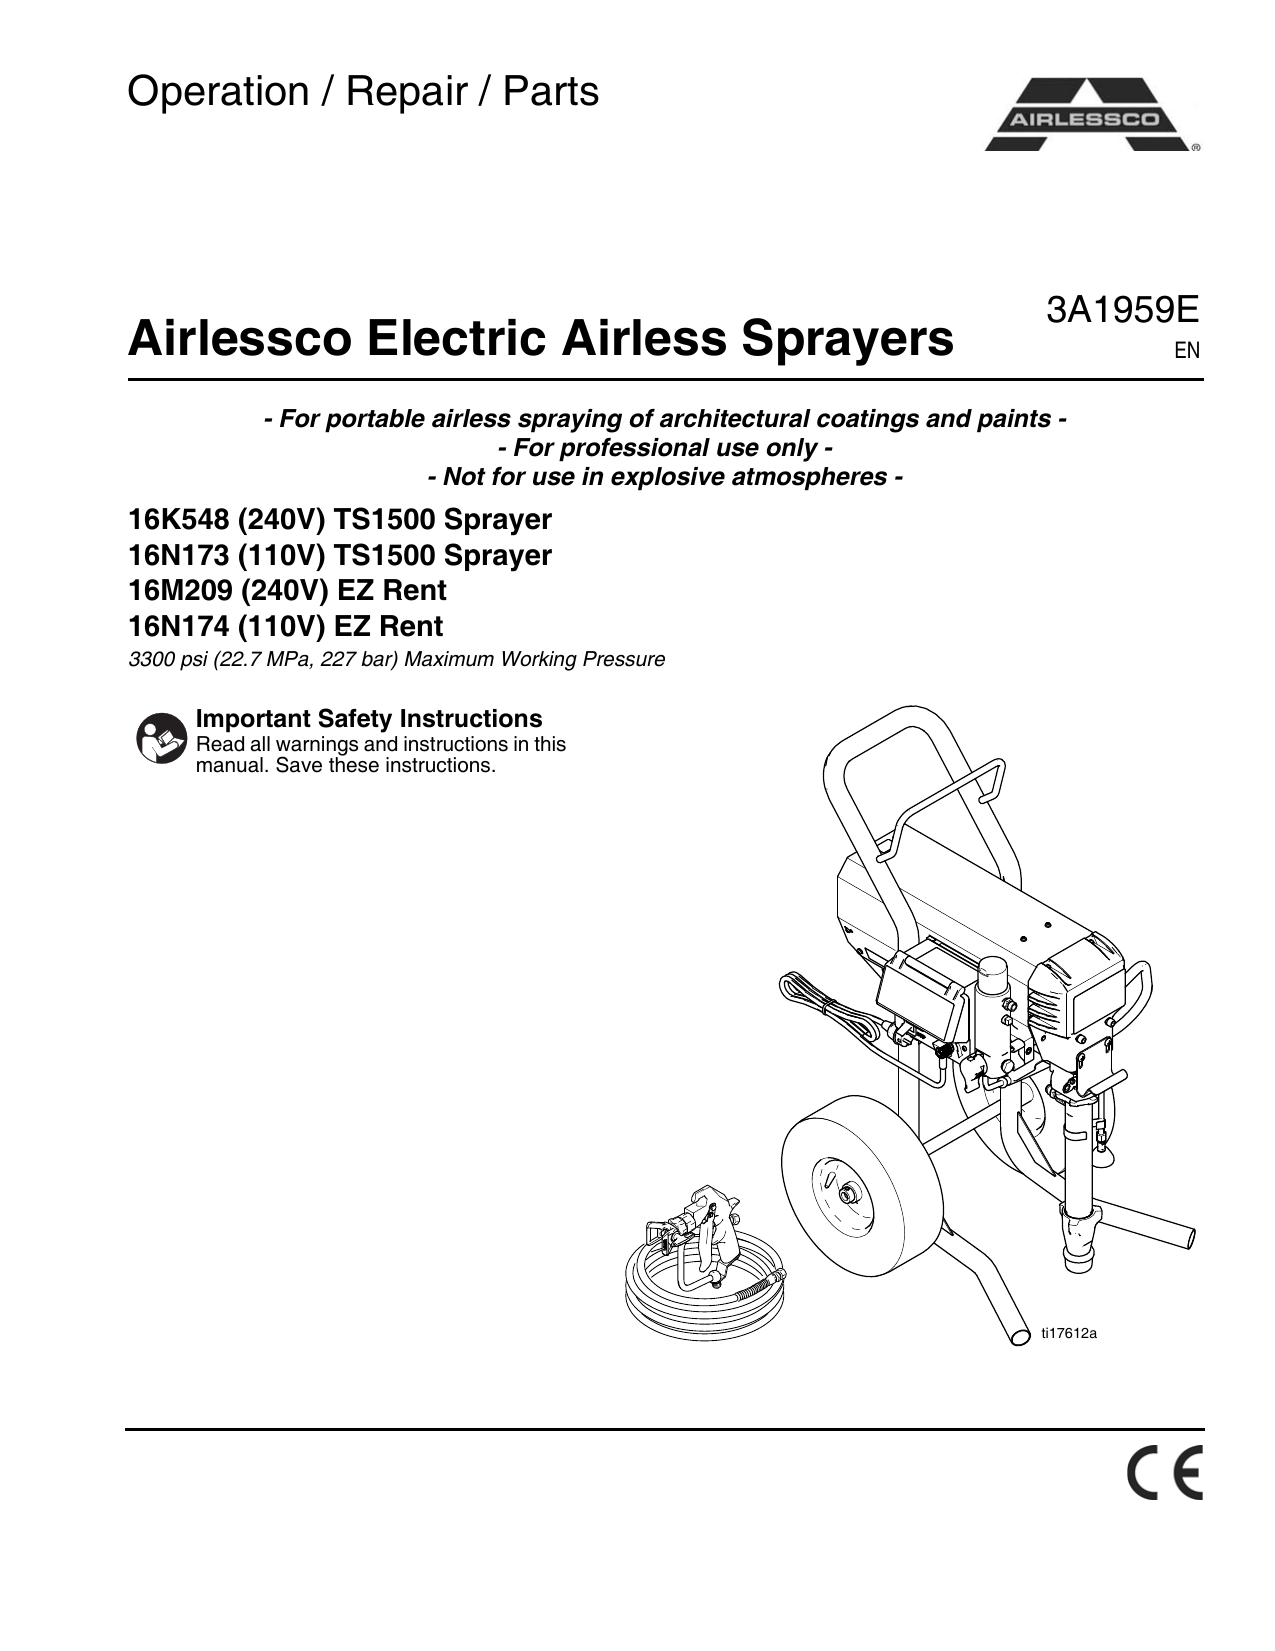 3A1959E, Airlessco Electric Airless Sprayers, Operation | Manualzz